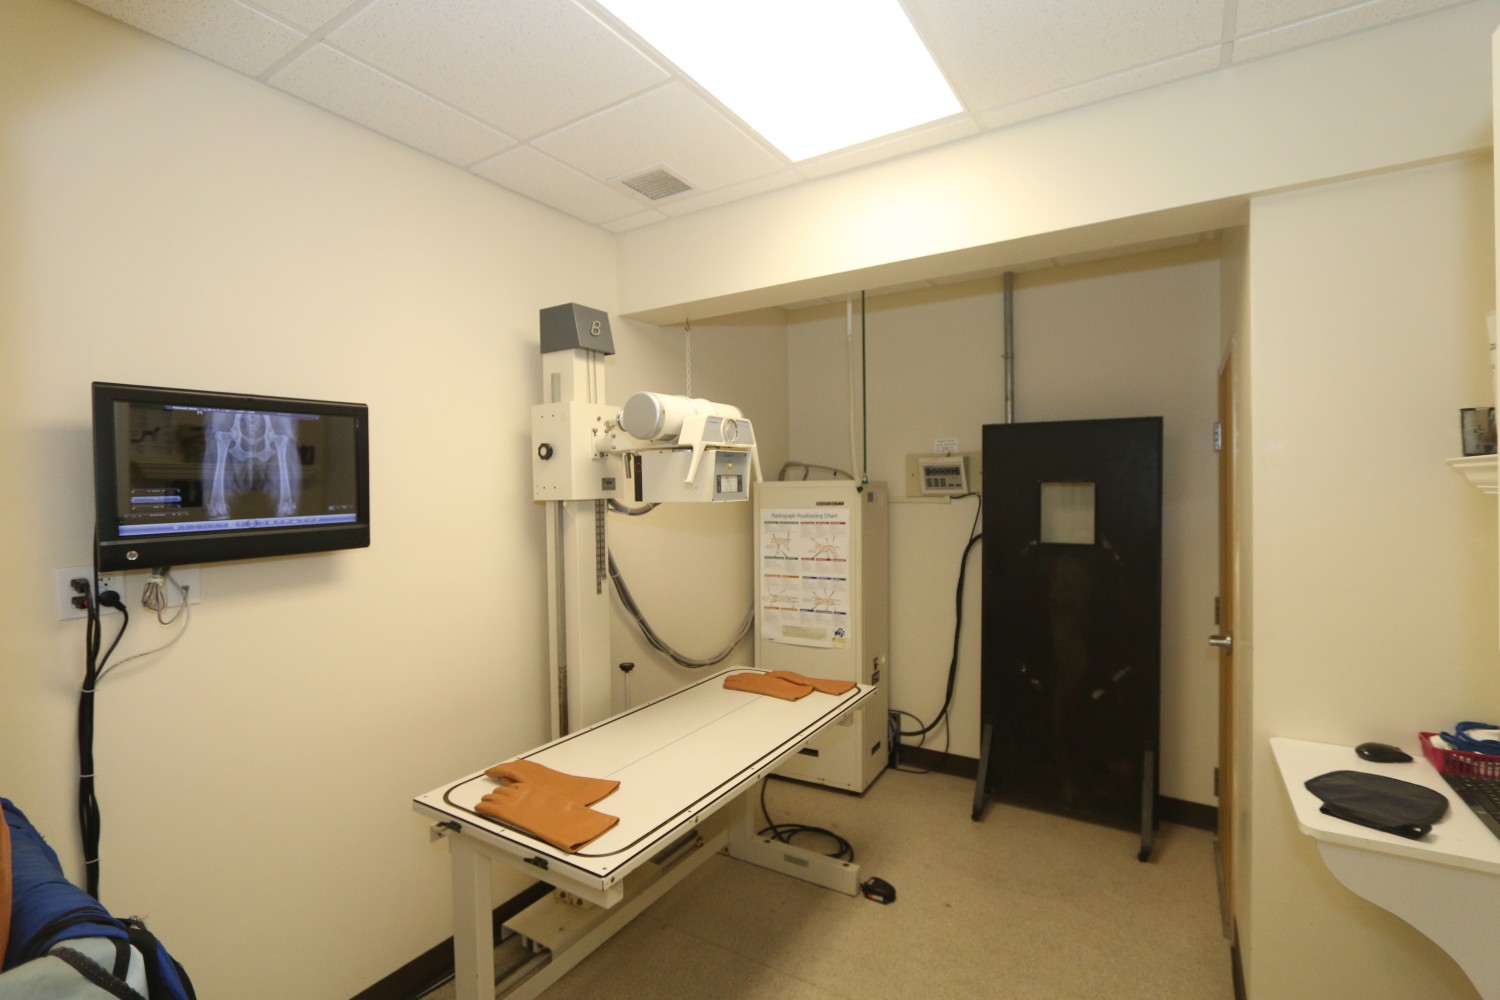 Radiology room